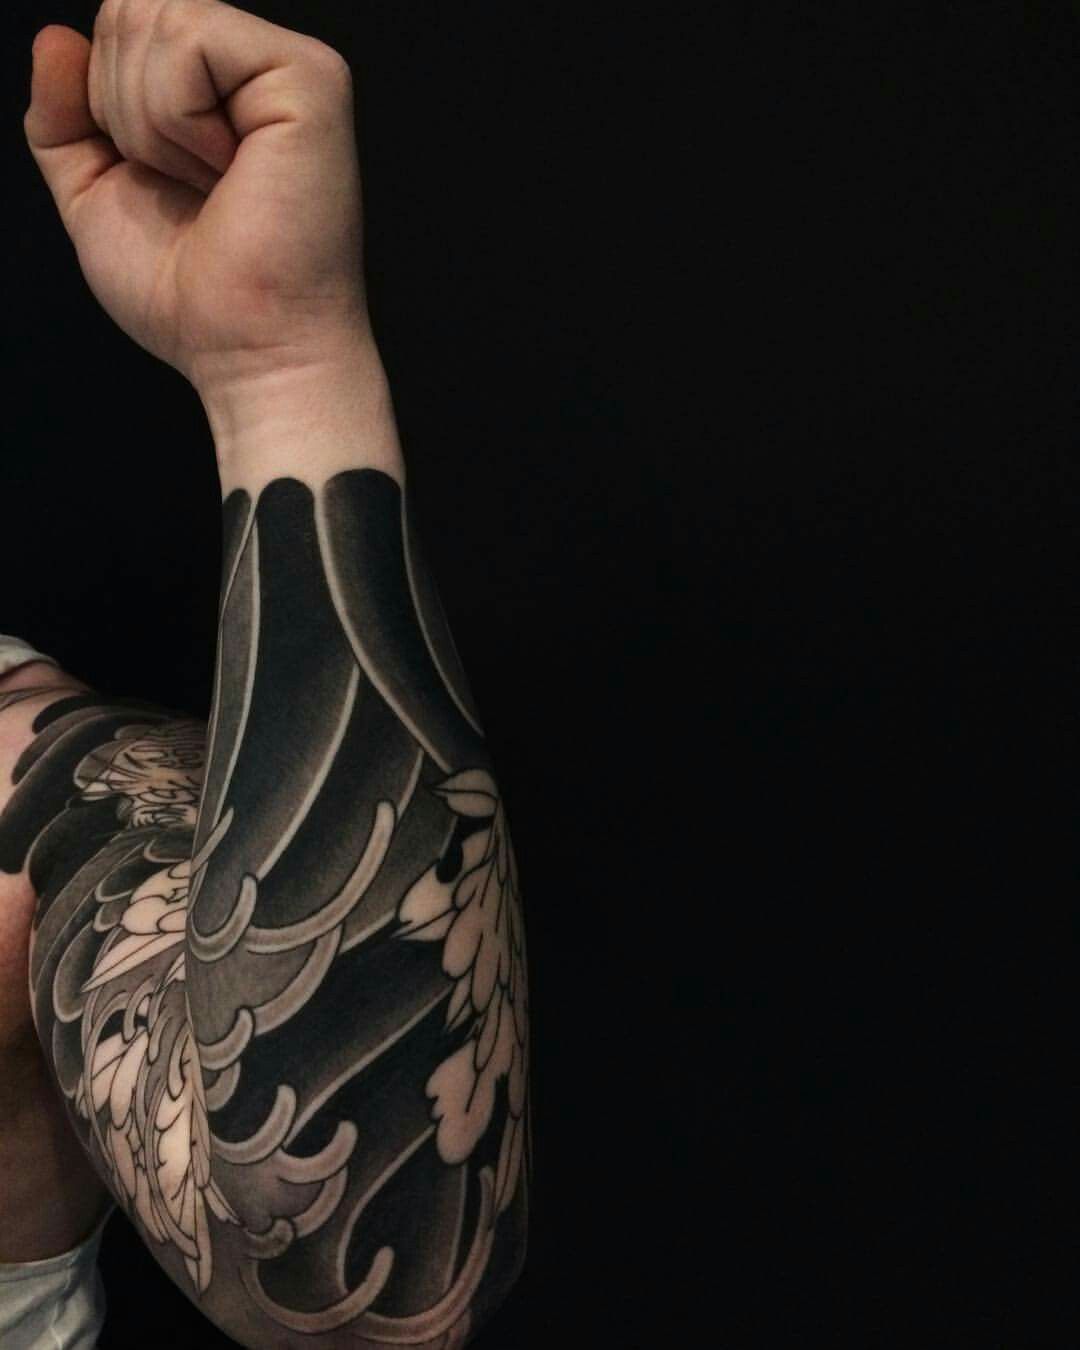 Traditional Japanese tattoo sleeve